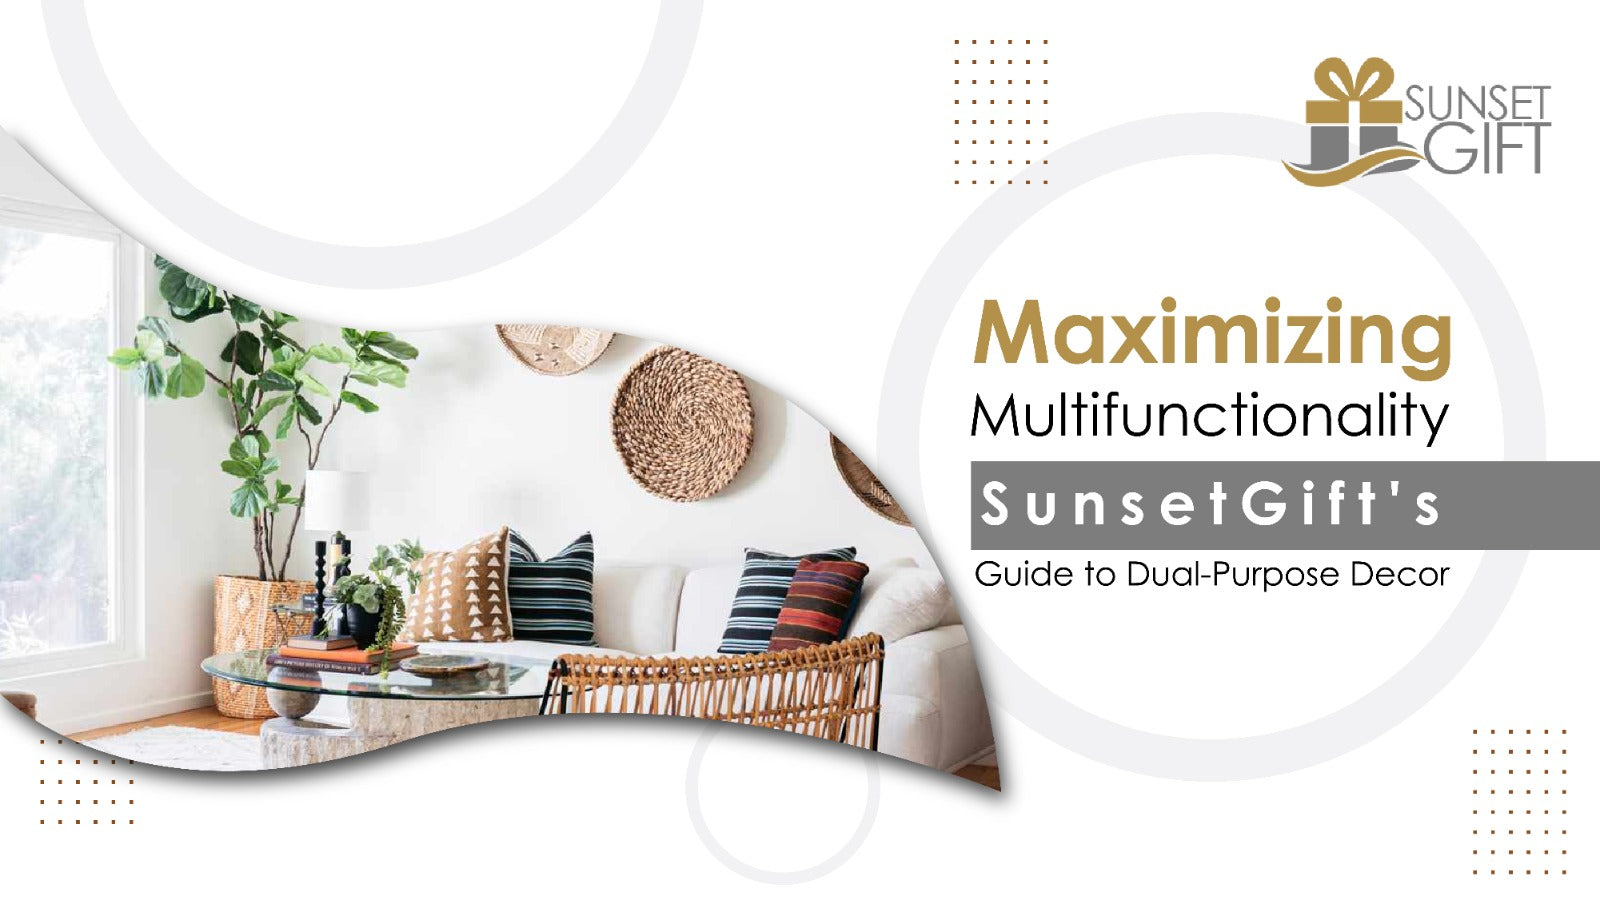 Maximizing Multifunctionality: SunsetGift's Guide to Dual-Purpose Decor